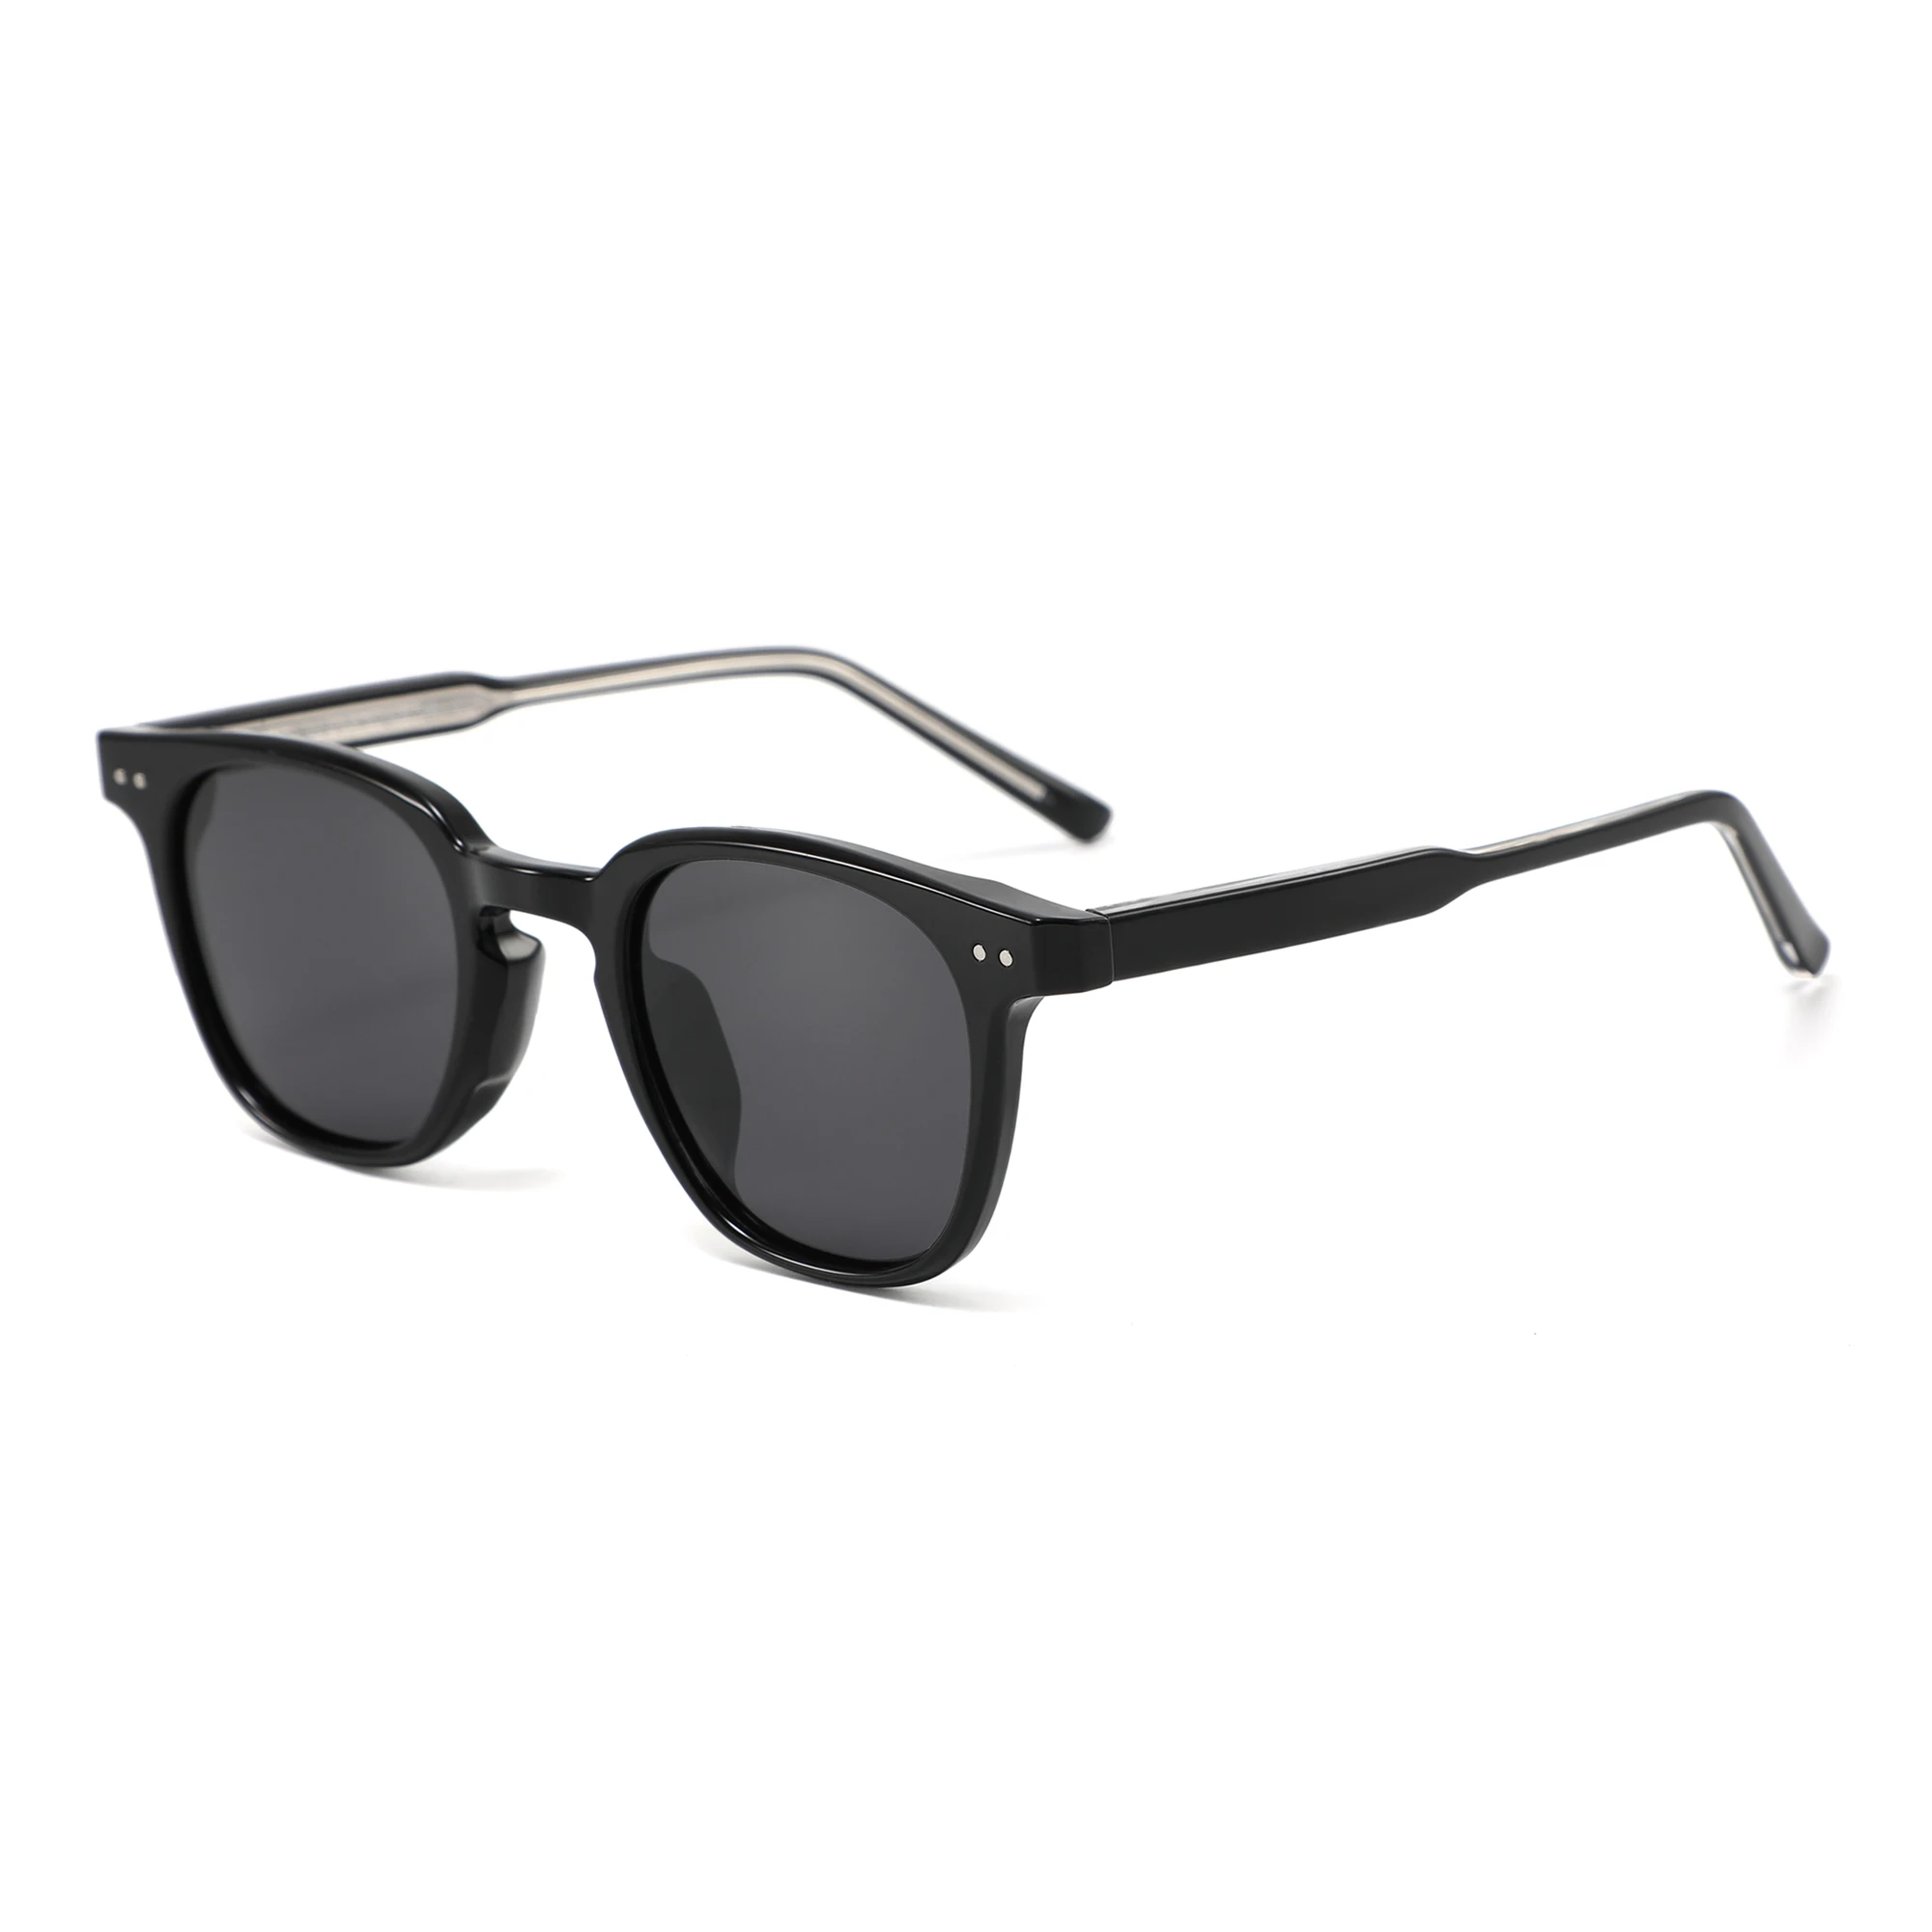 

Men private label sunglasses luxury brand vintage sunglasses glasses woman TR 90 frame polarized